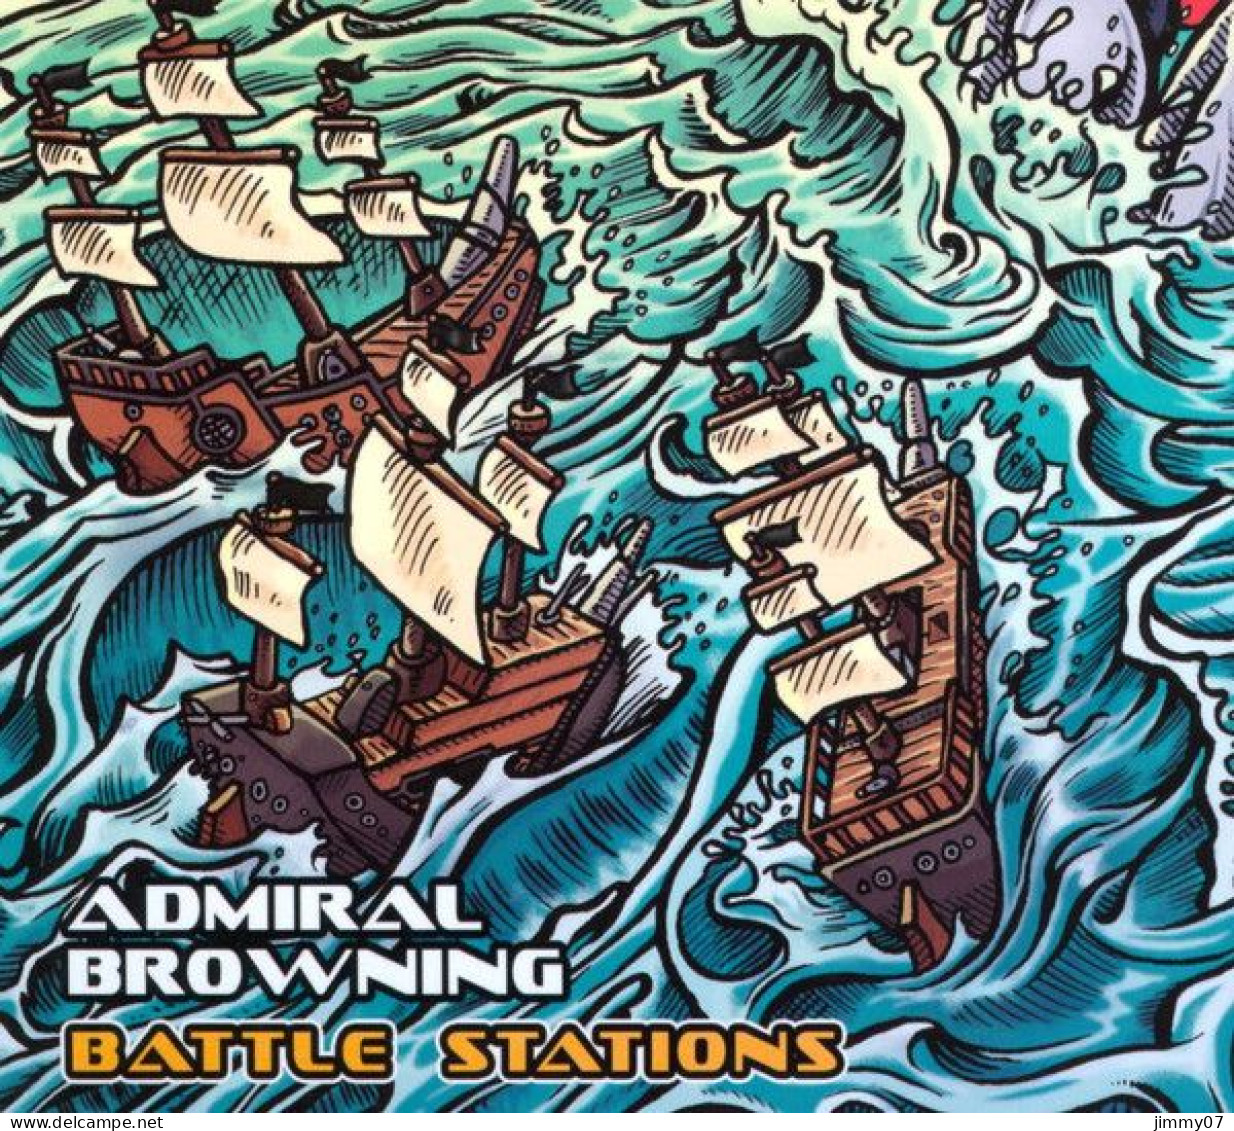 Admiral Browning - Battle Stations (CD, Album) - Hard Rock & Metal